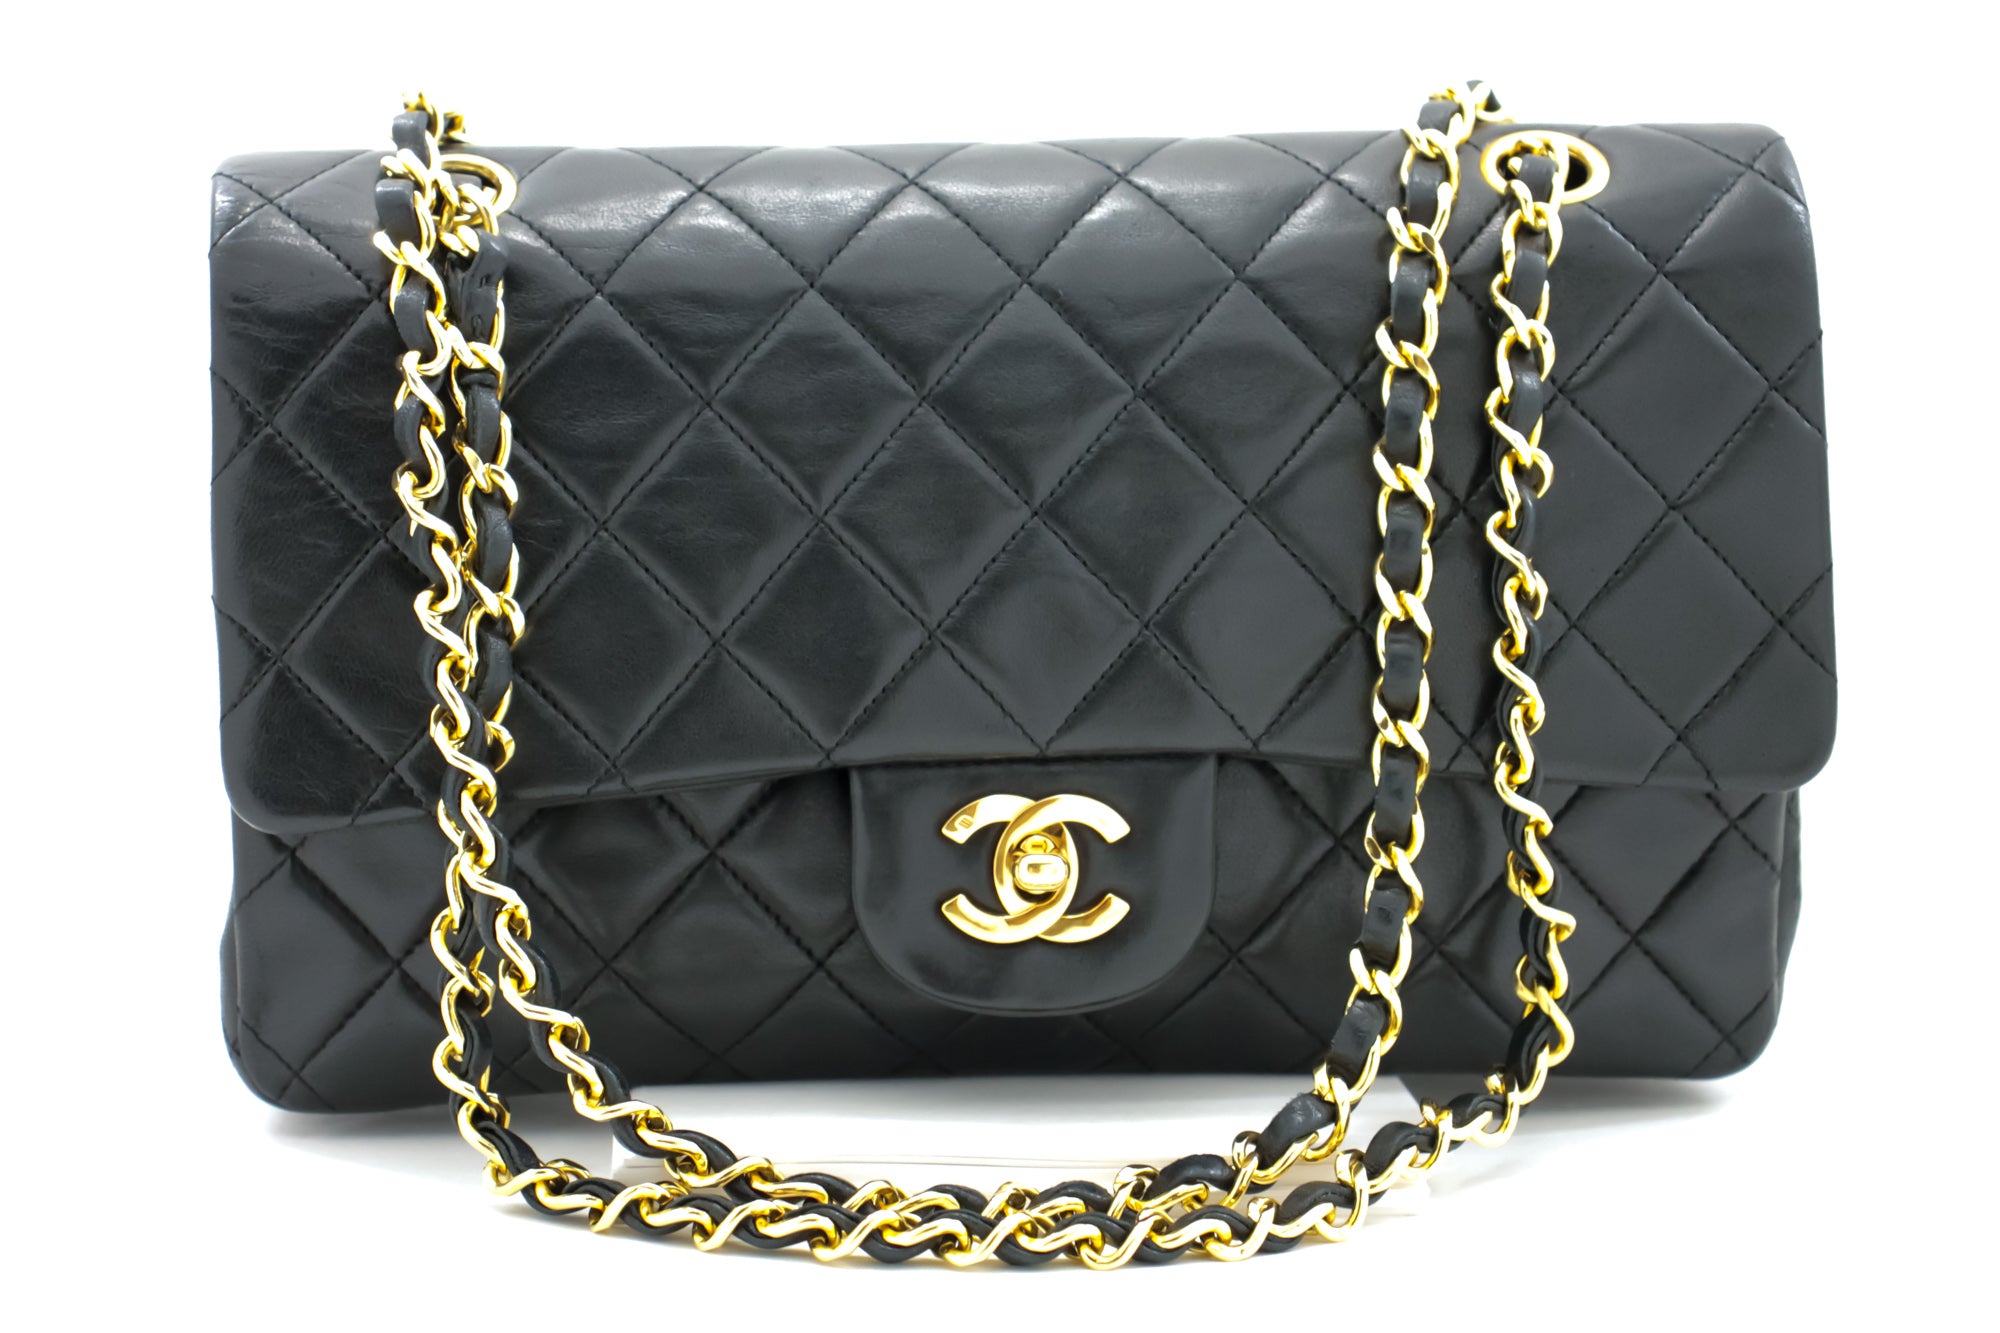 Chanel Classic Double Flap 10 Chain Shoulder Bag Black Lambskin i65